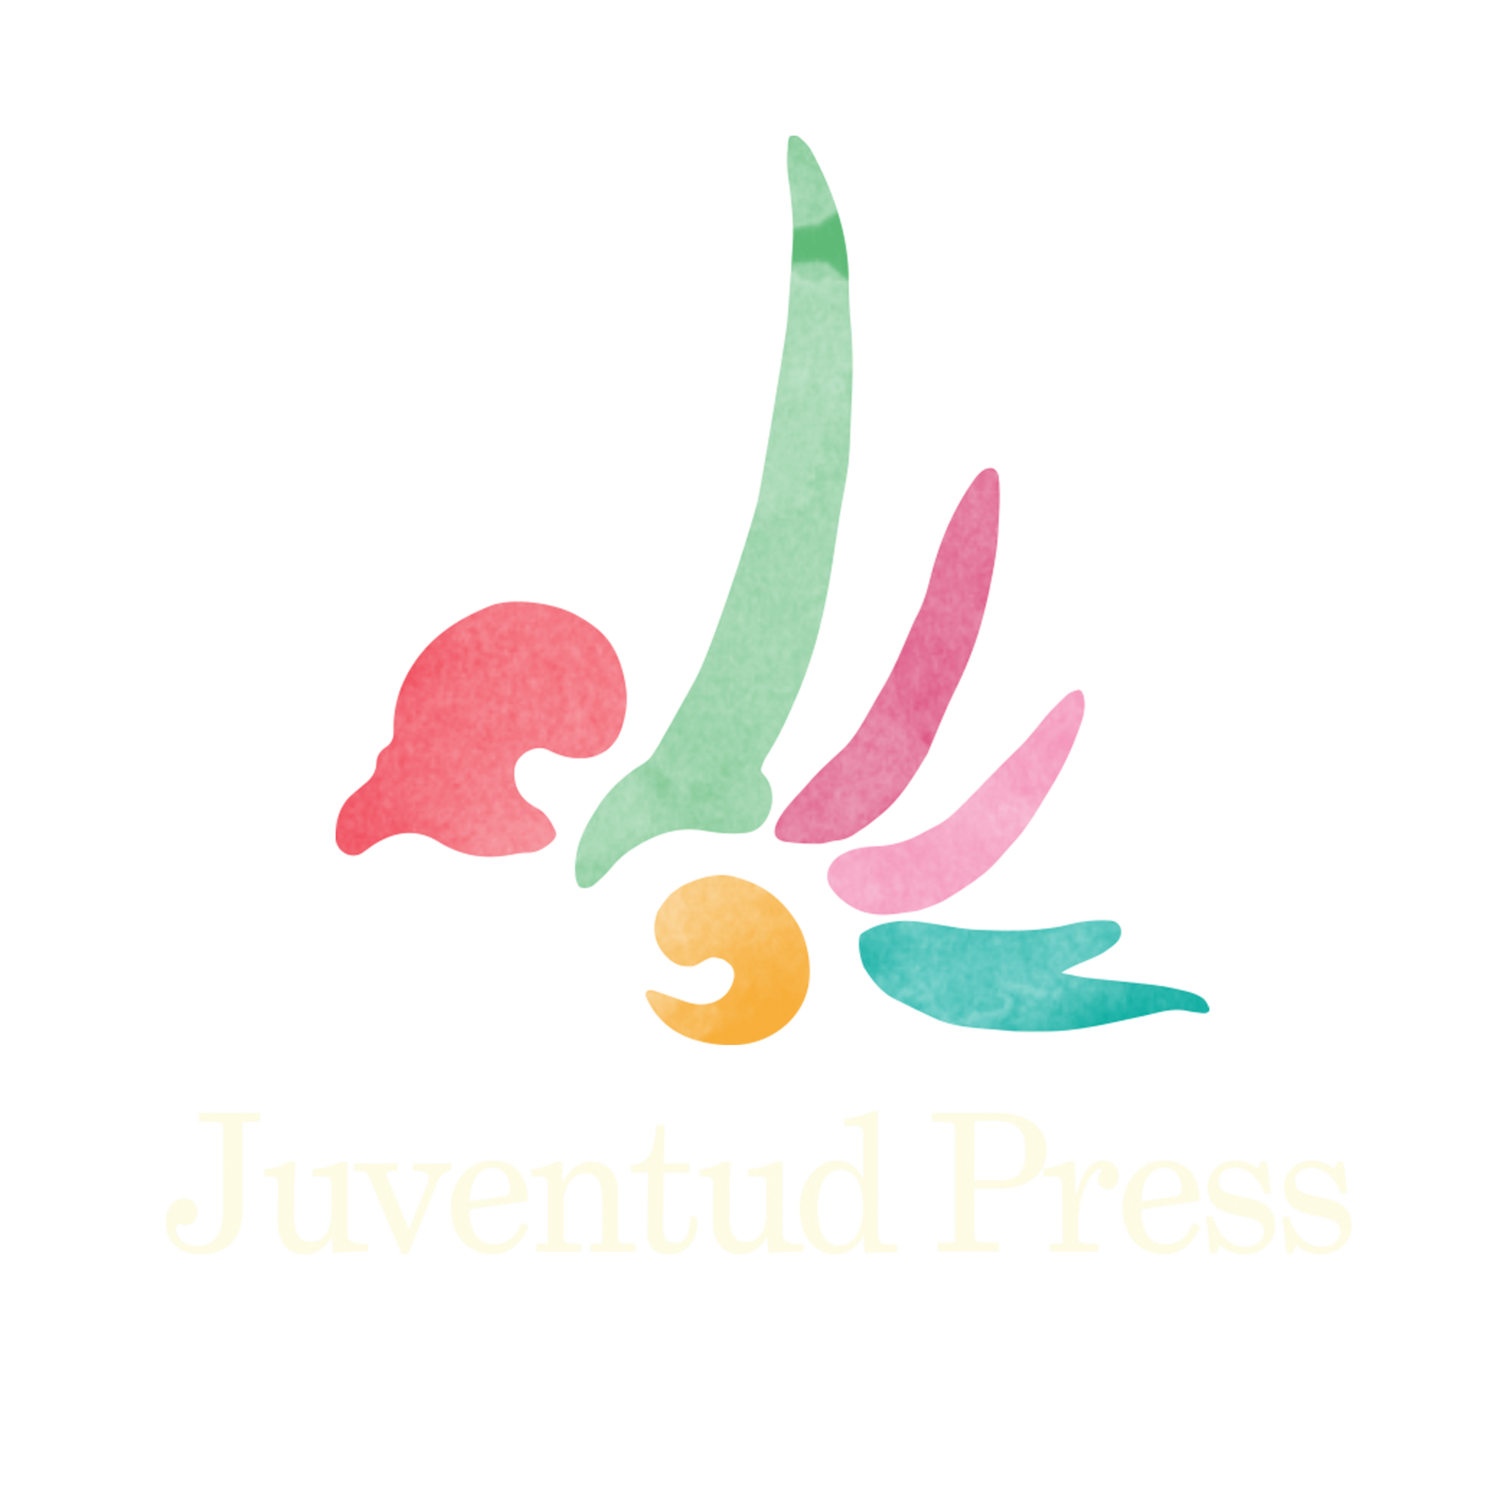 Juventud Press